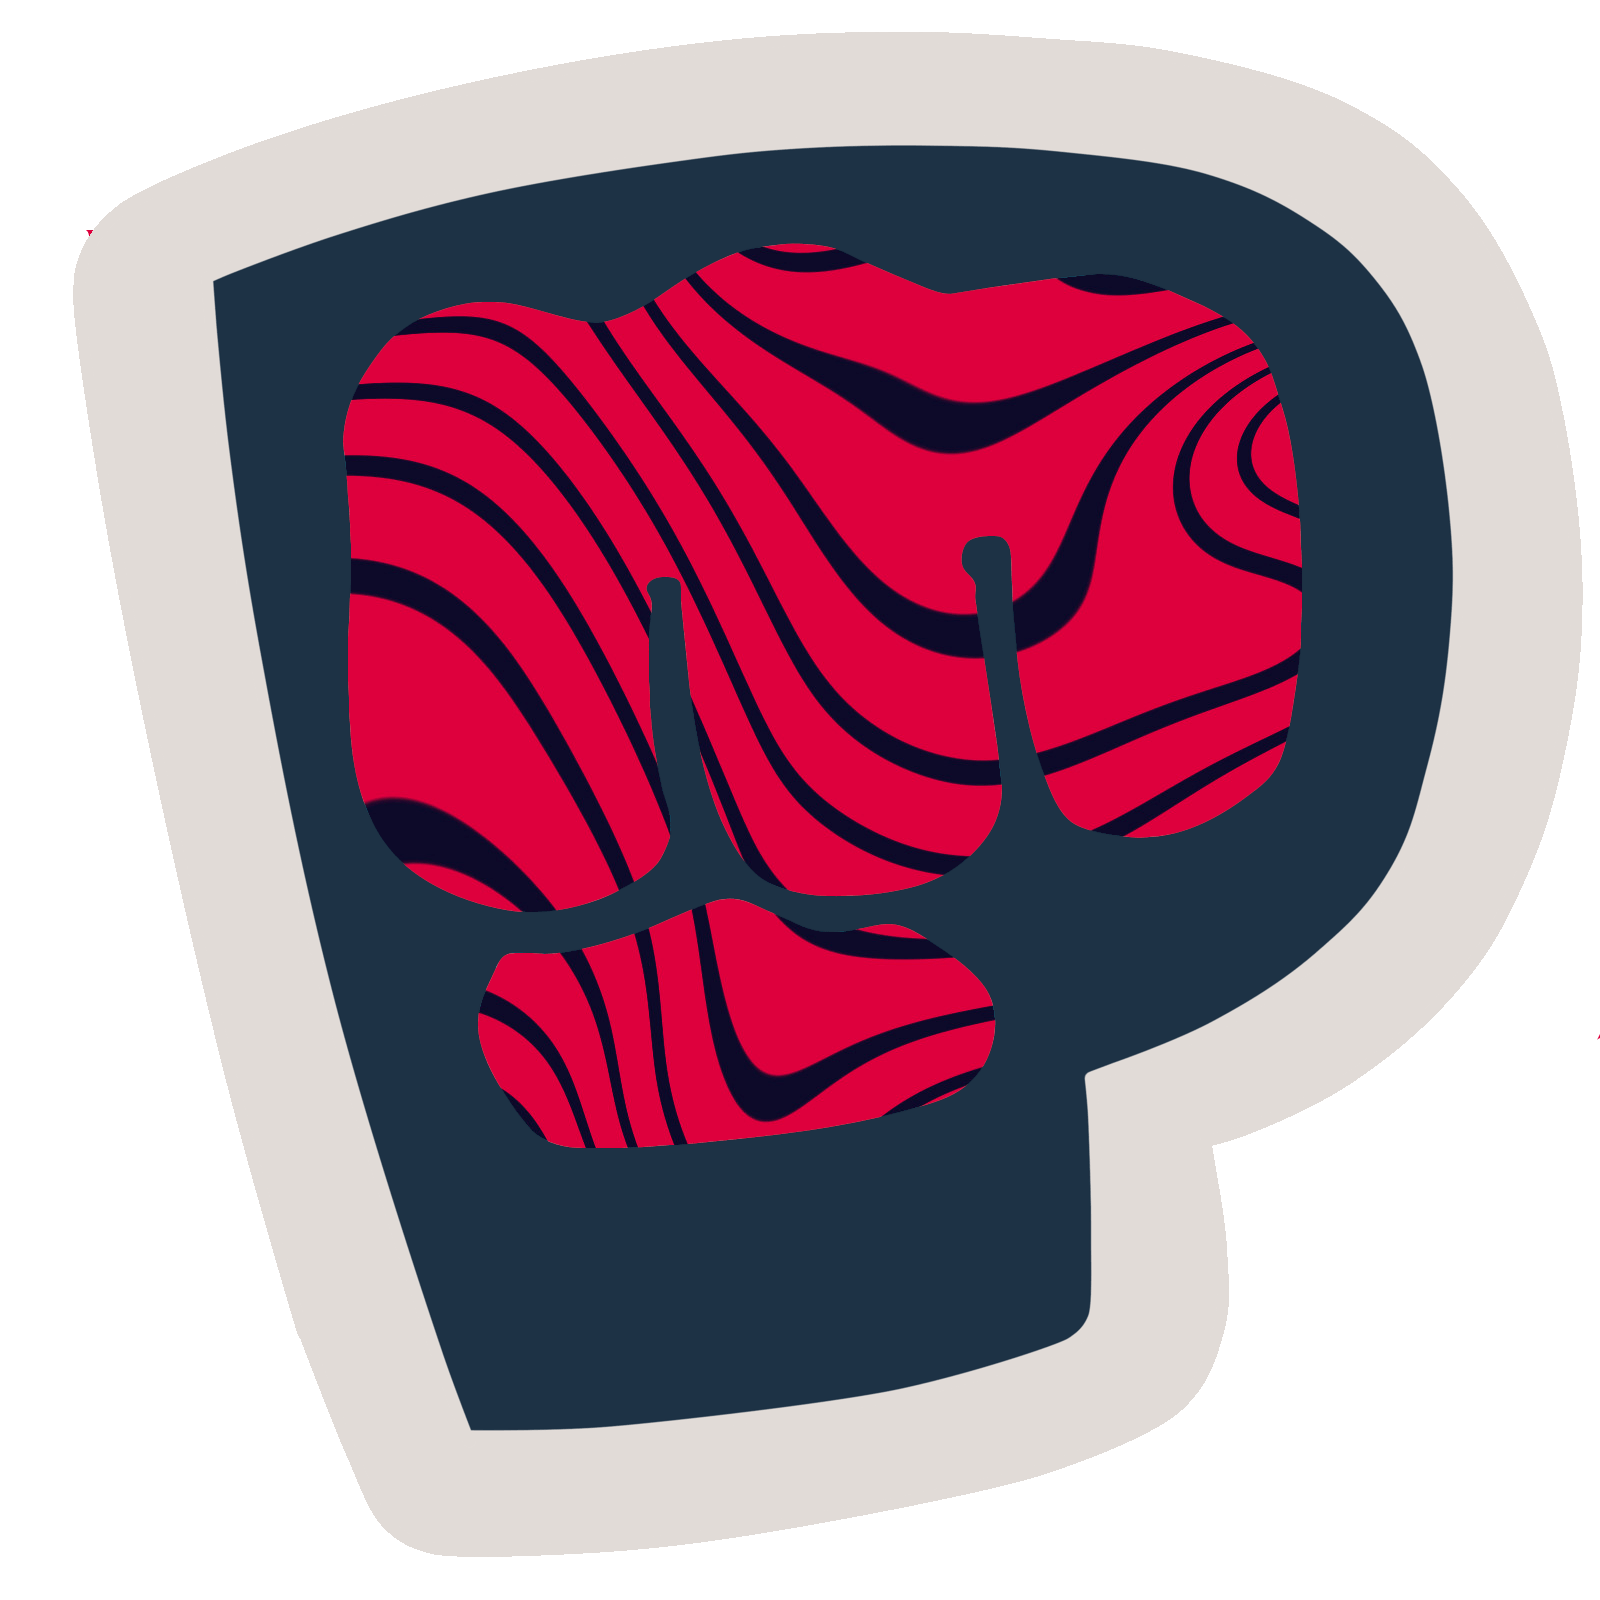 PewDiePie Logo - idea for logo when Pewdiepie gets 100 million subs ...